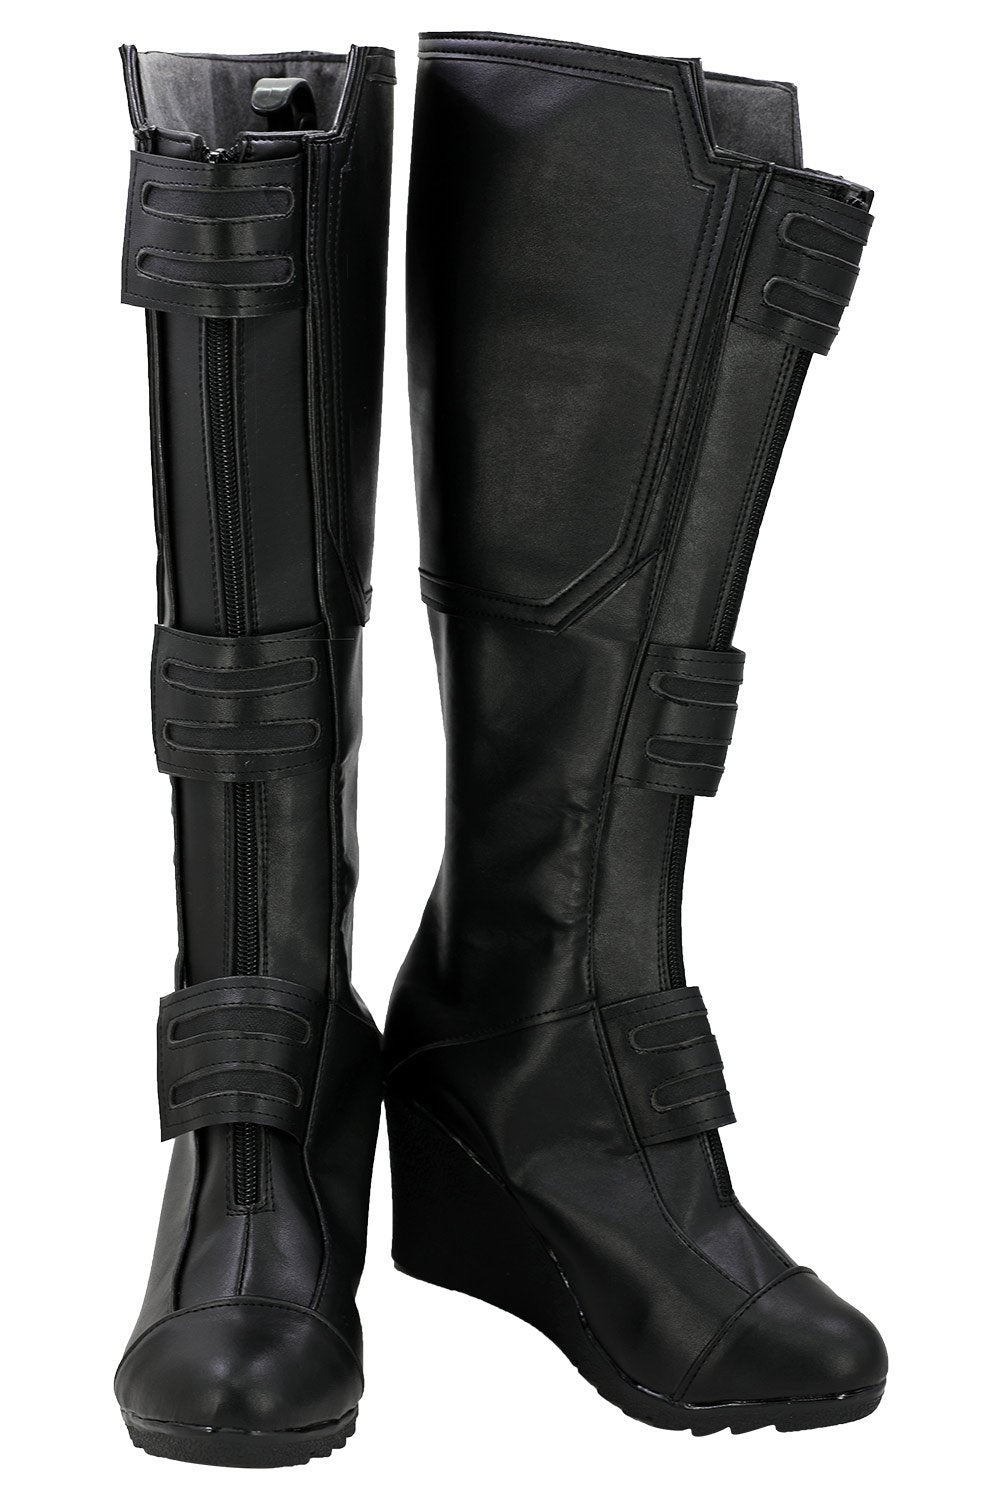 black widow boots